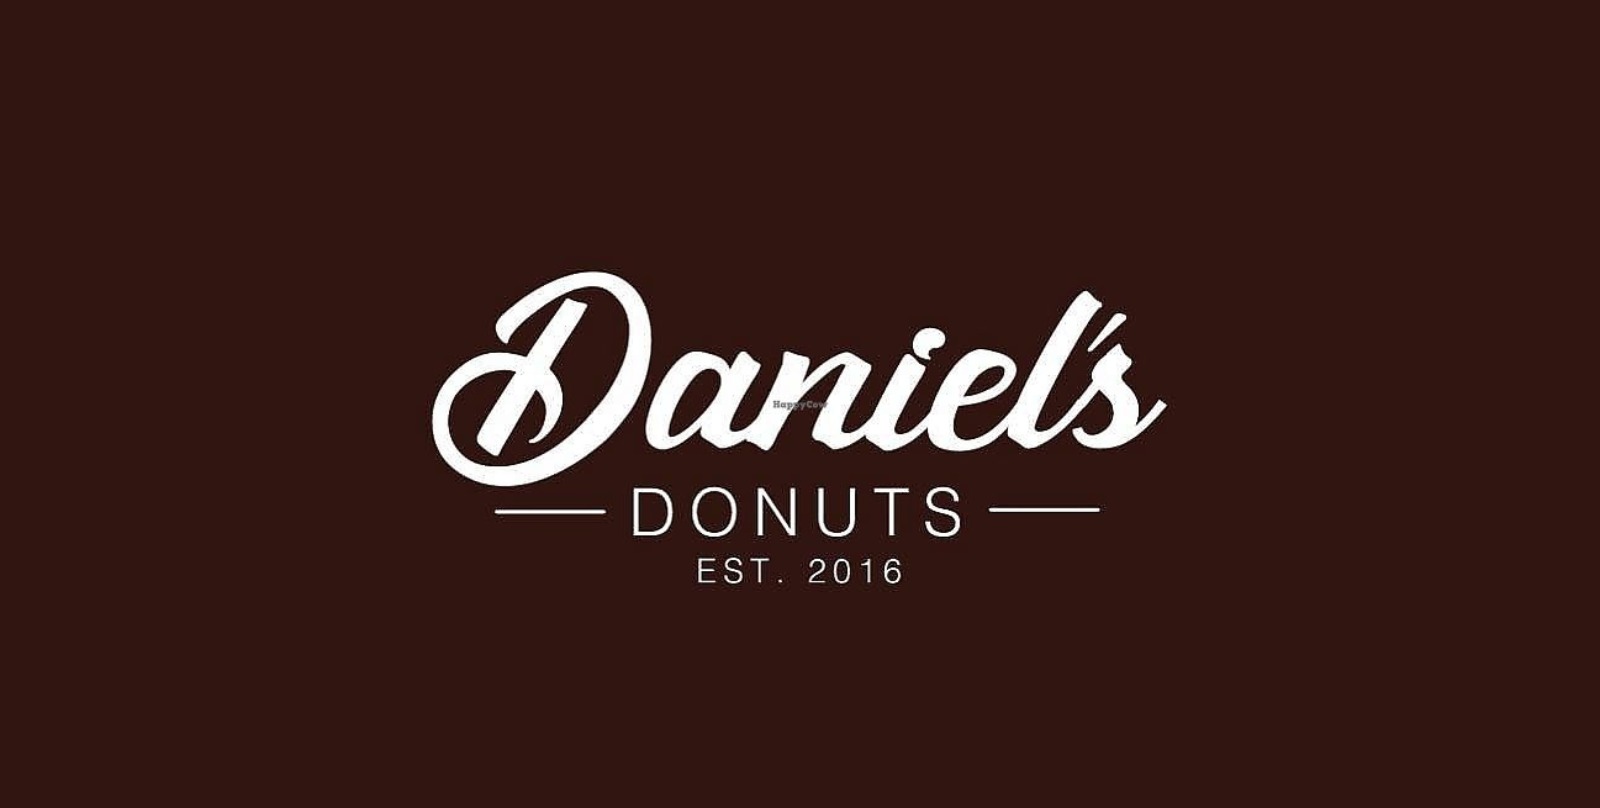 daniel's donuts menu prices australia